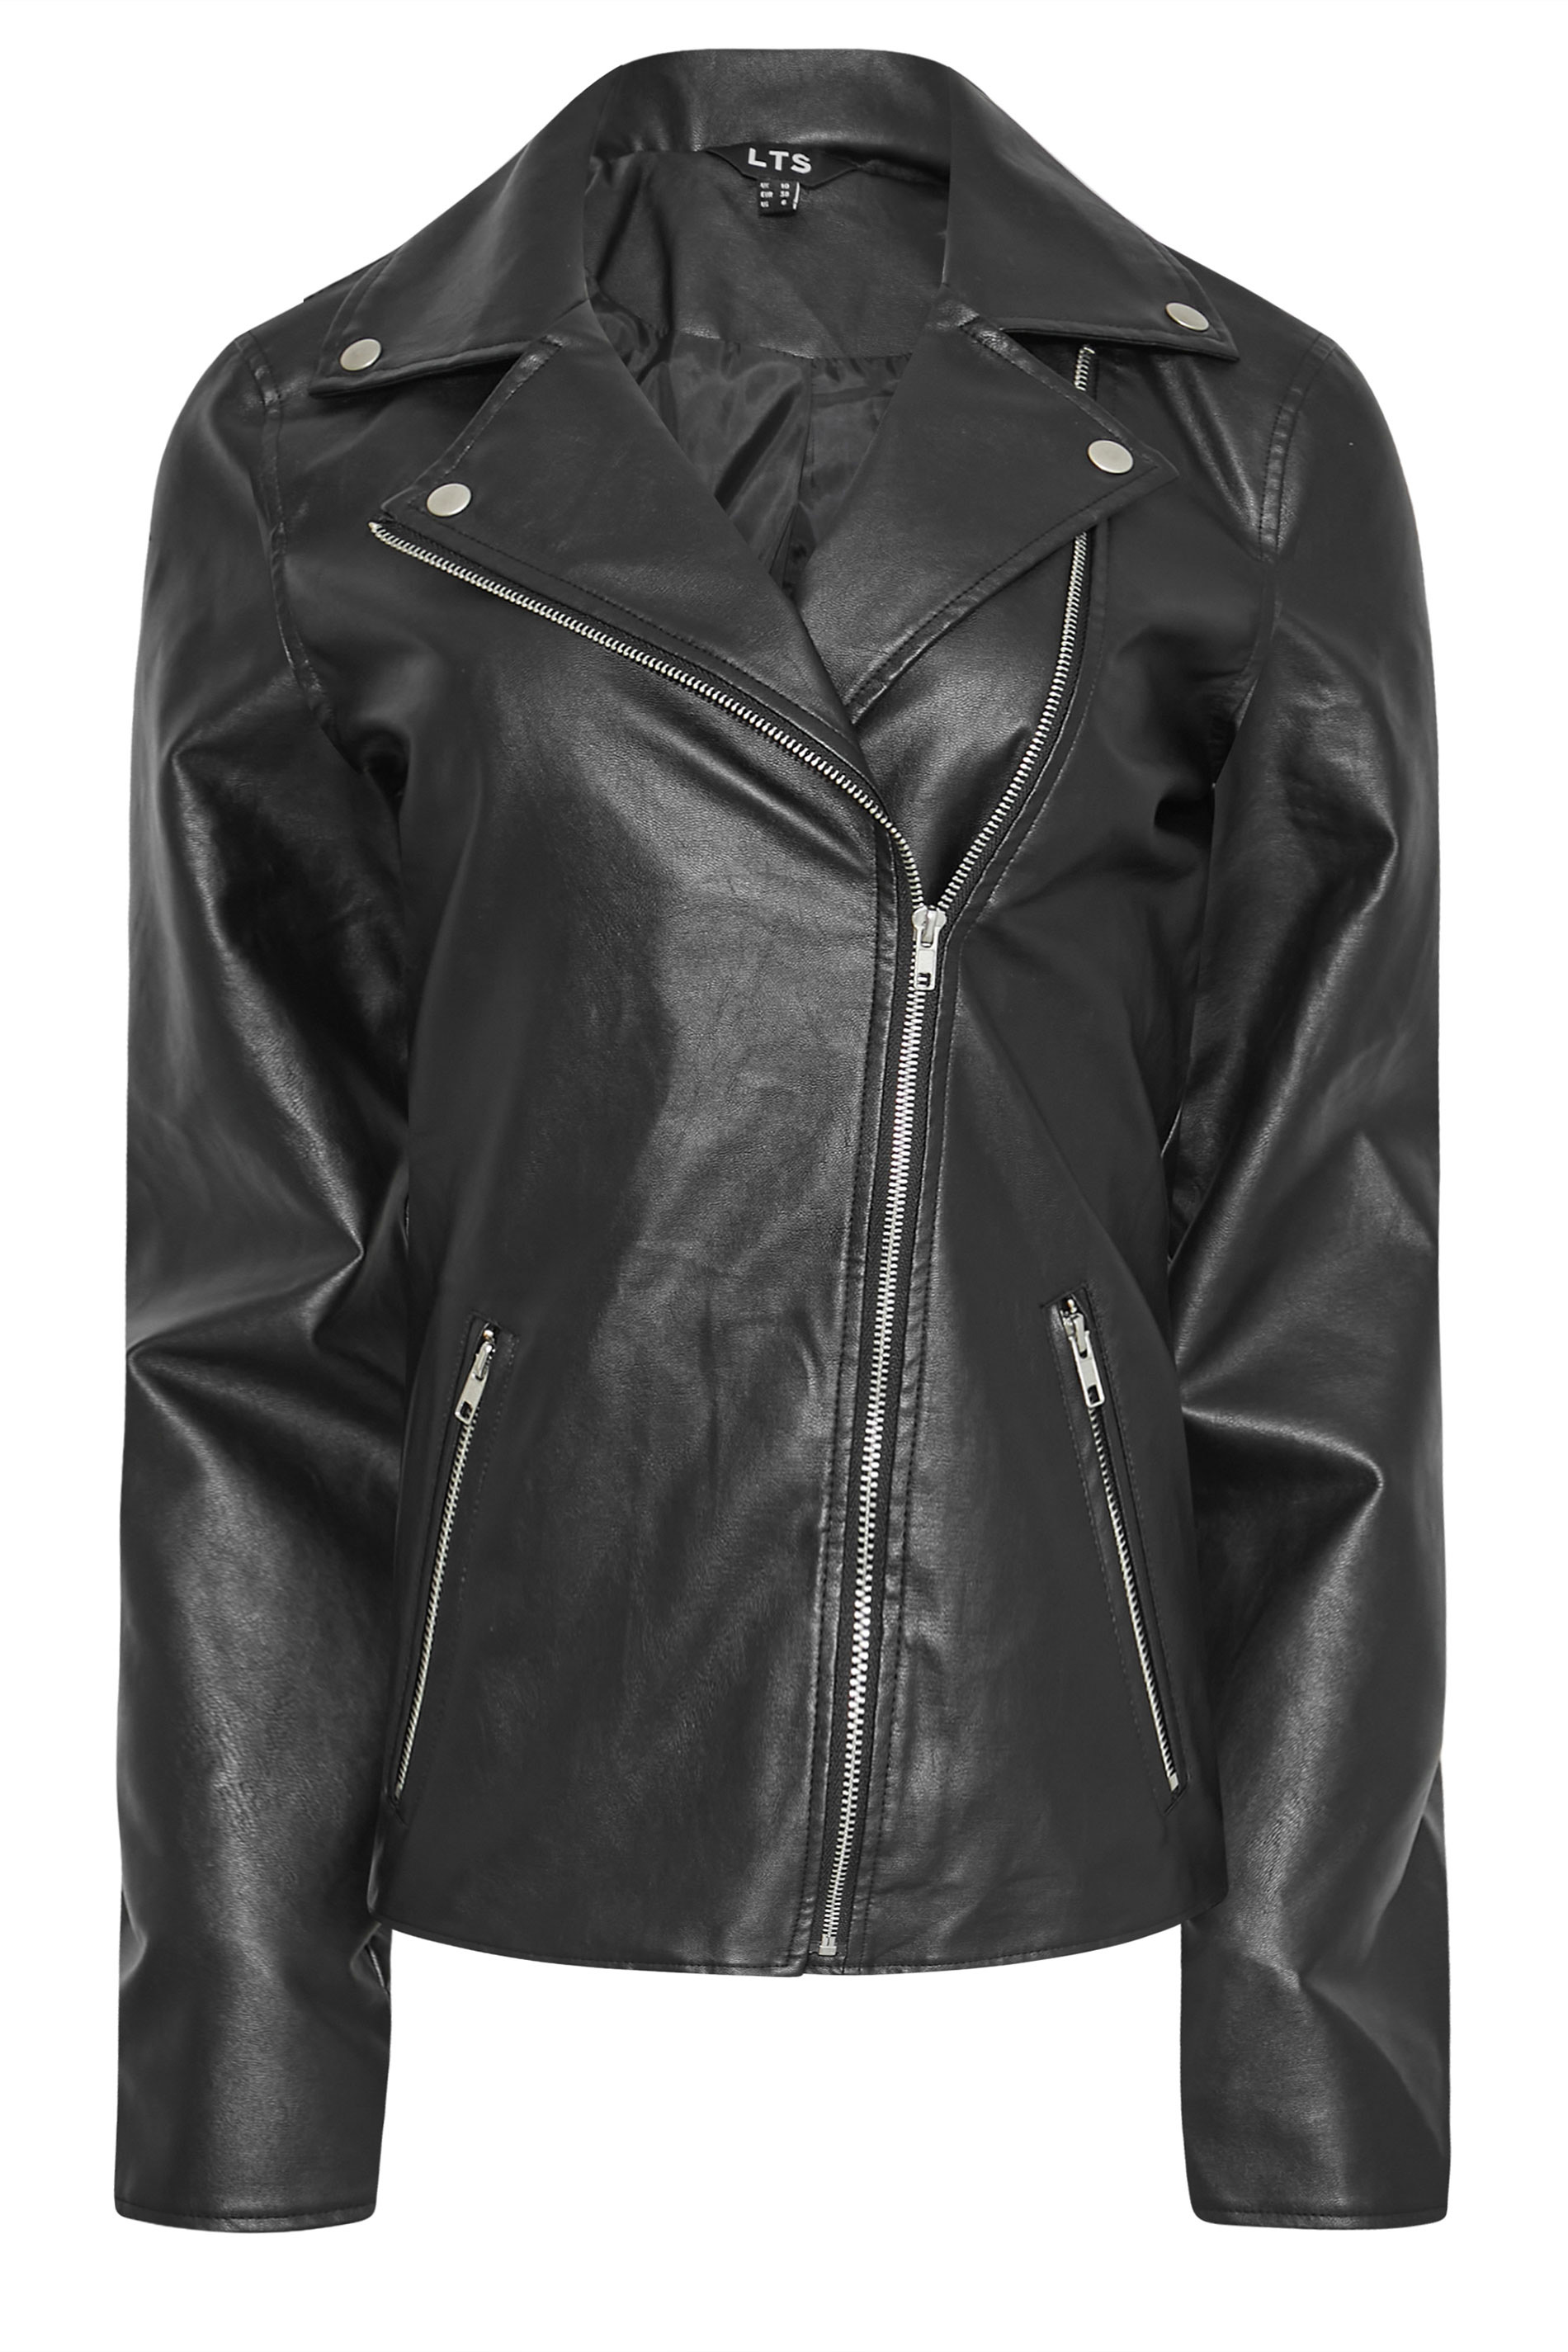 LTS Tall Women's Faux Leather Biker Jacket | Long Tall Sally